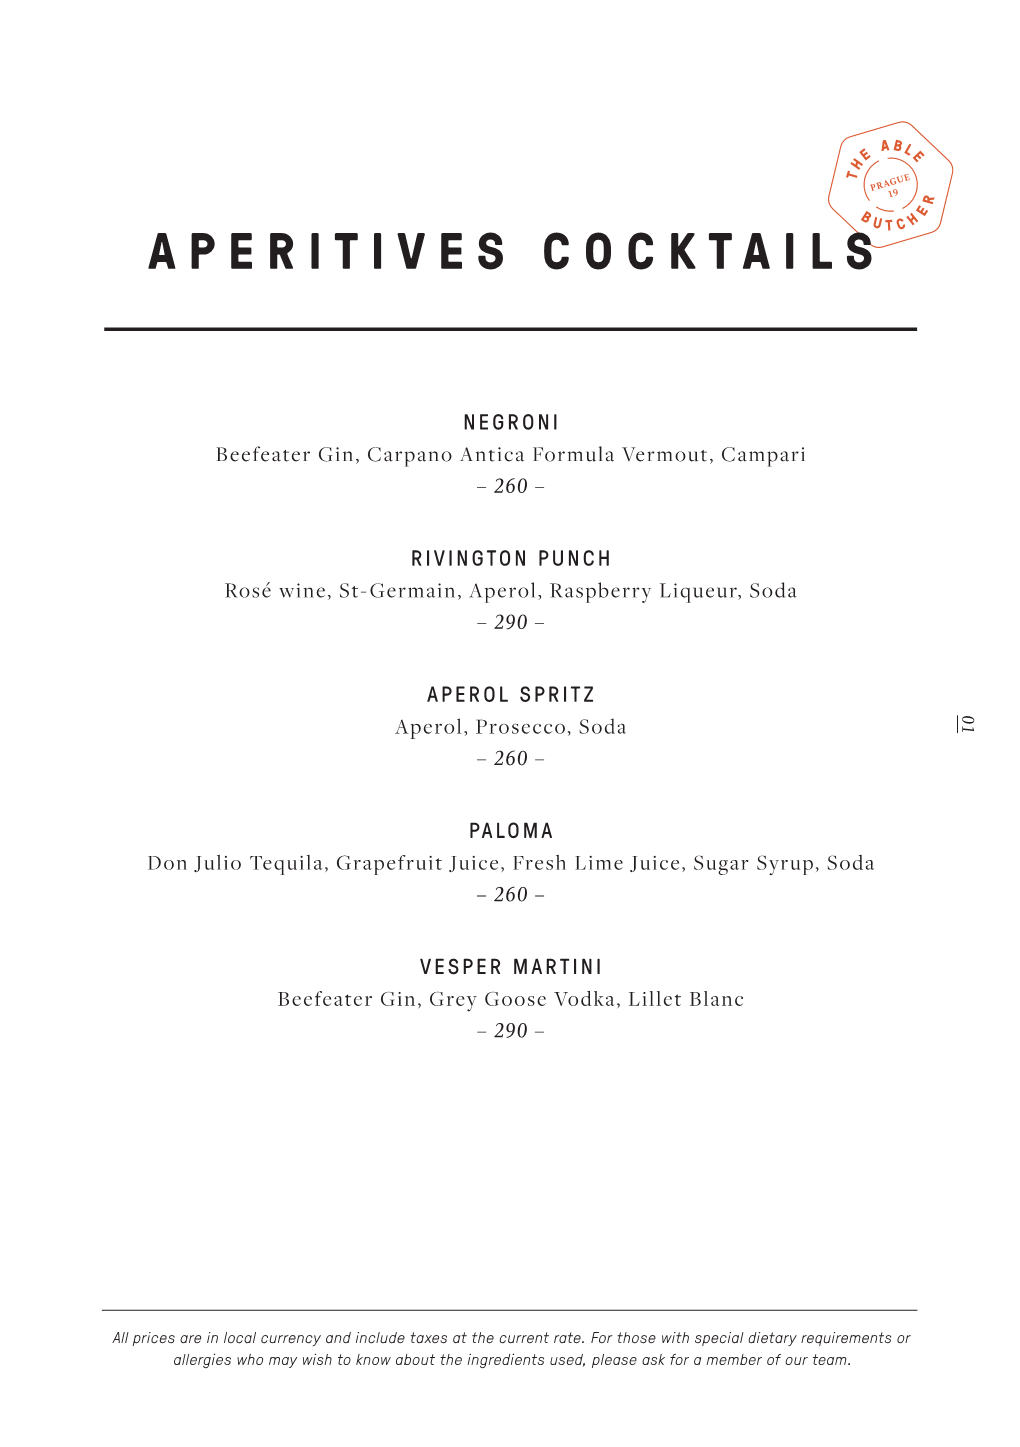 Aperitives Cocktails